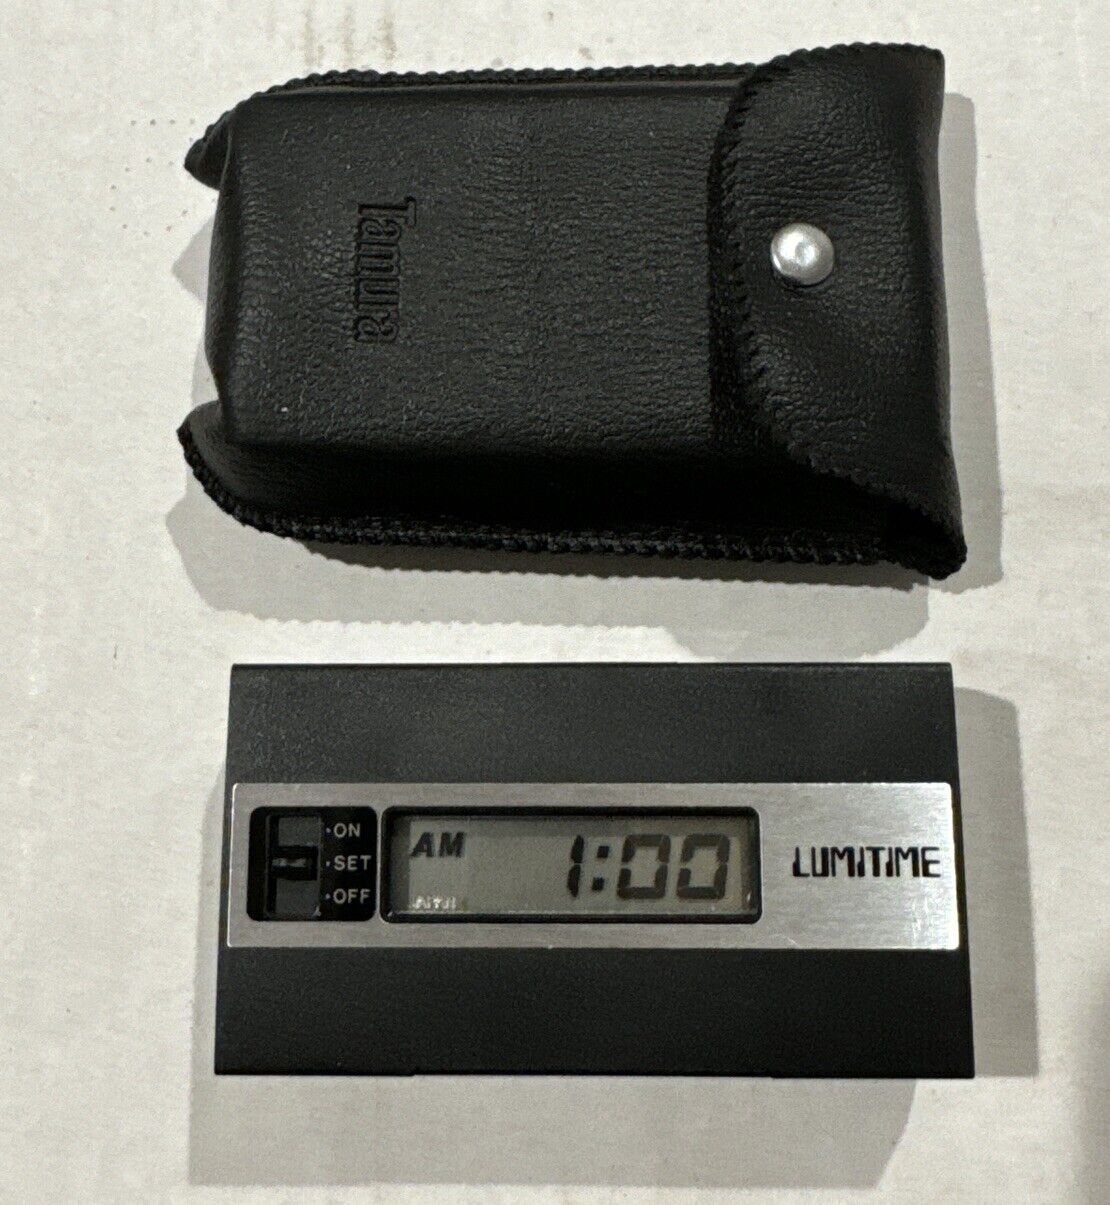 LUMITIME Portable Battery Alarm Clock WITH ORIGINAL CASE by TAMURA Japan 1970s